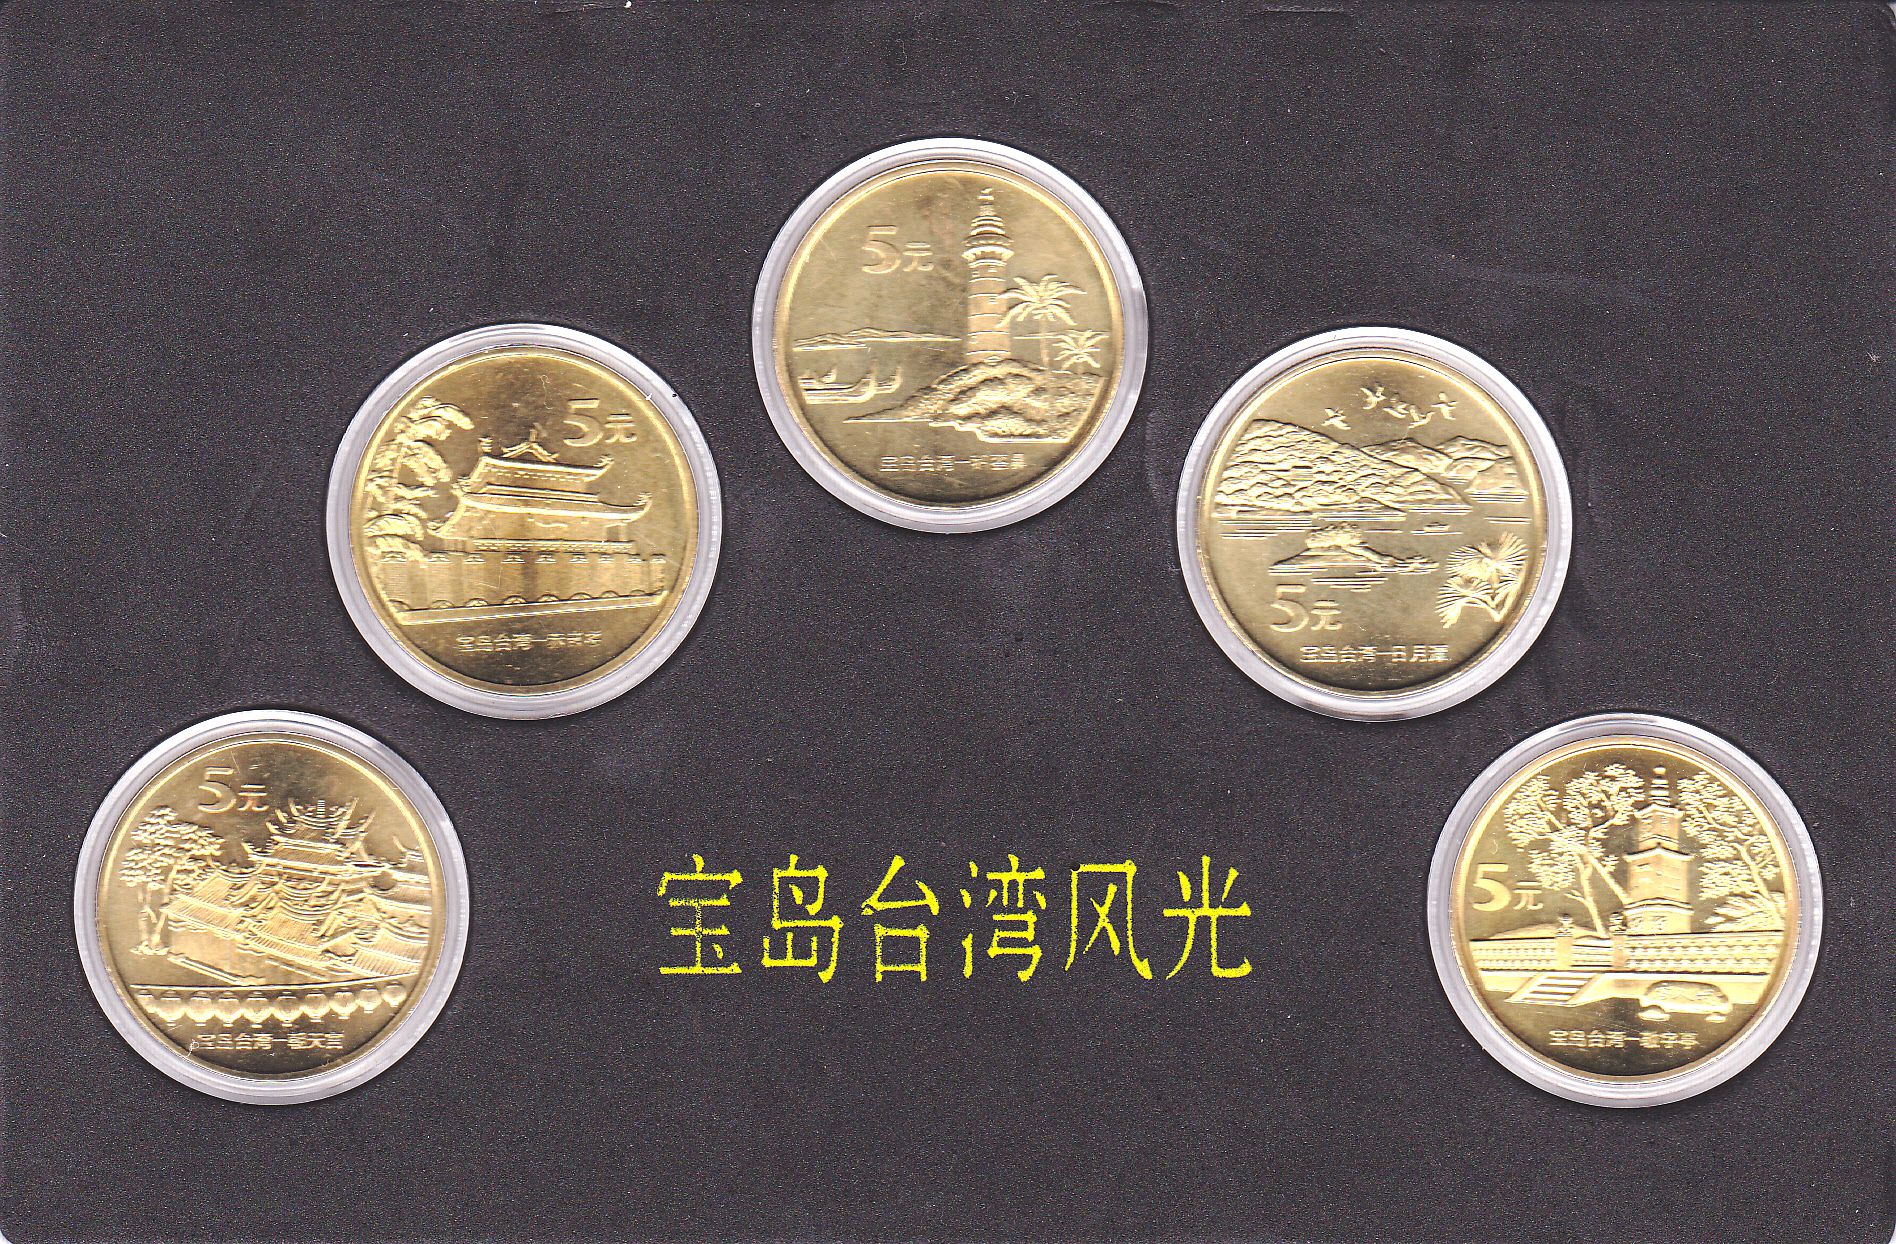 K7554, China Taiwan Island Scence Series, 5 pcs Coins, 2003 to 2005